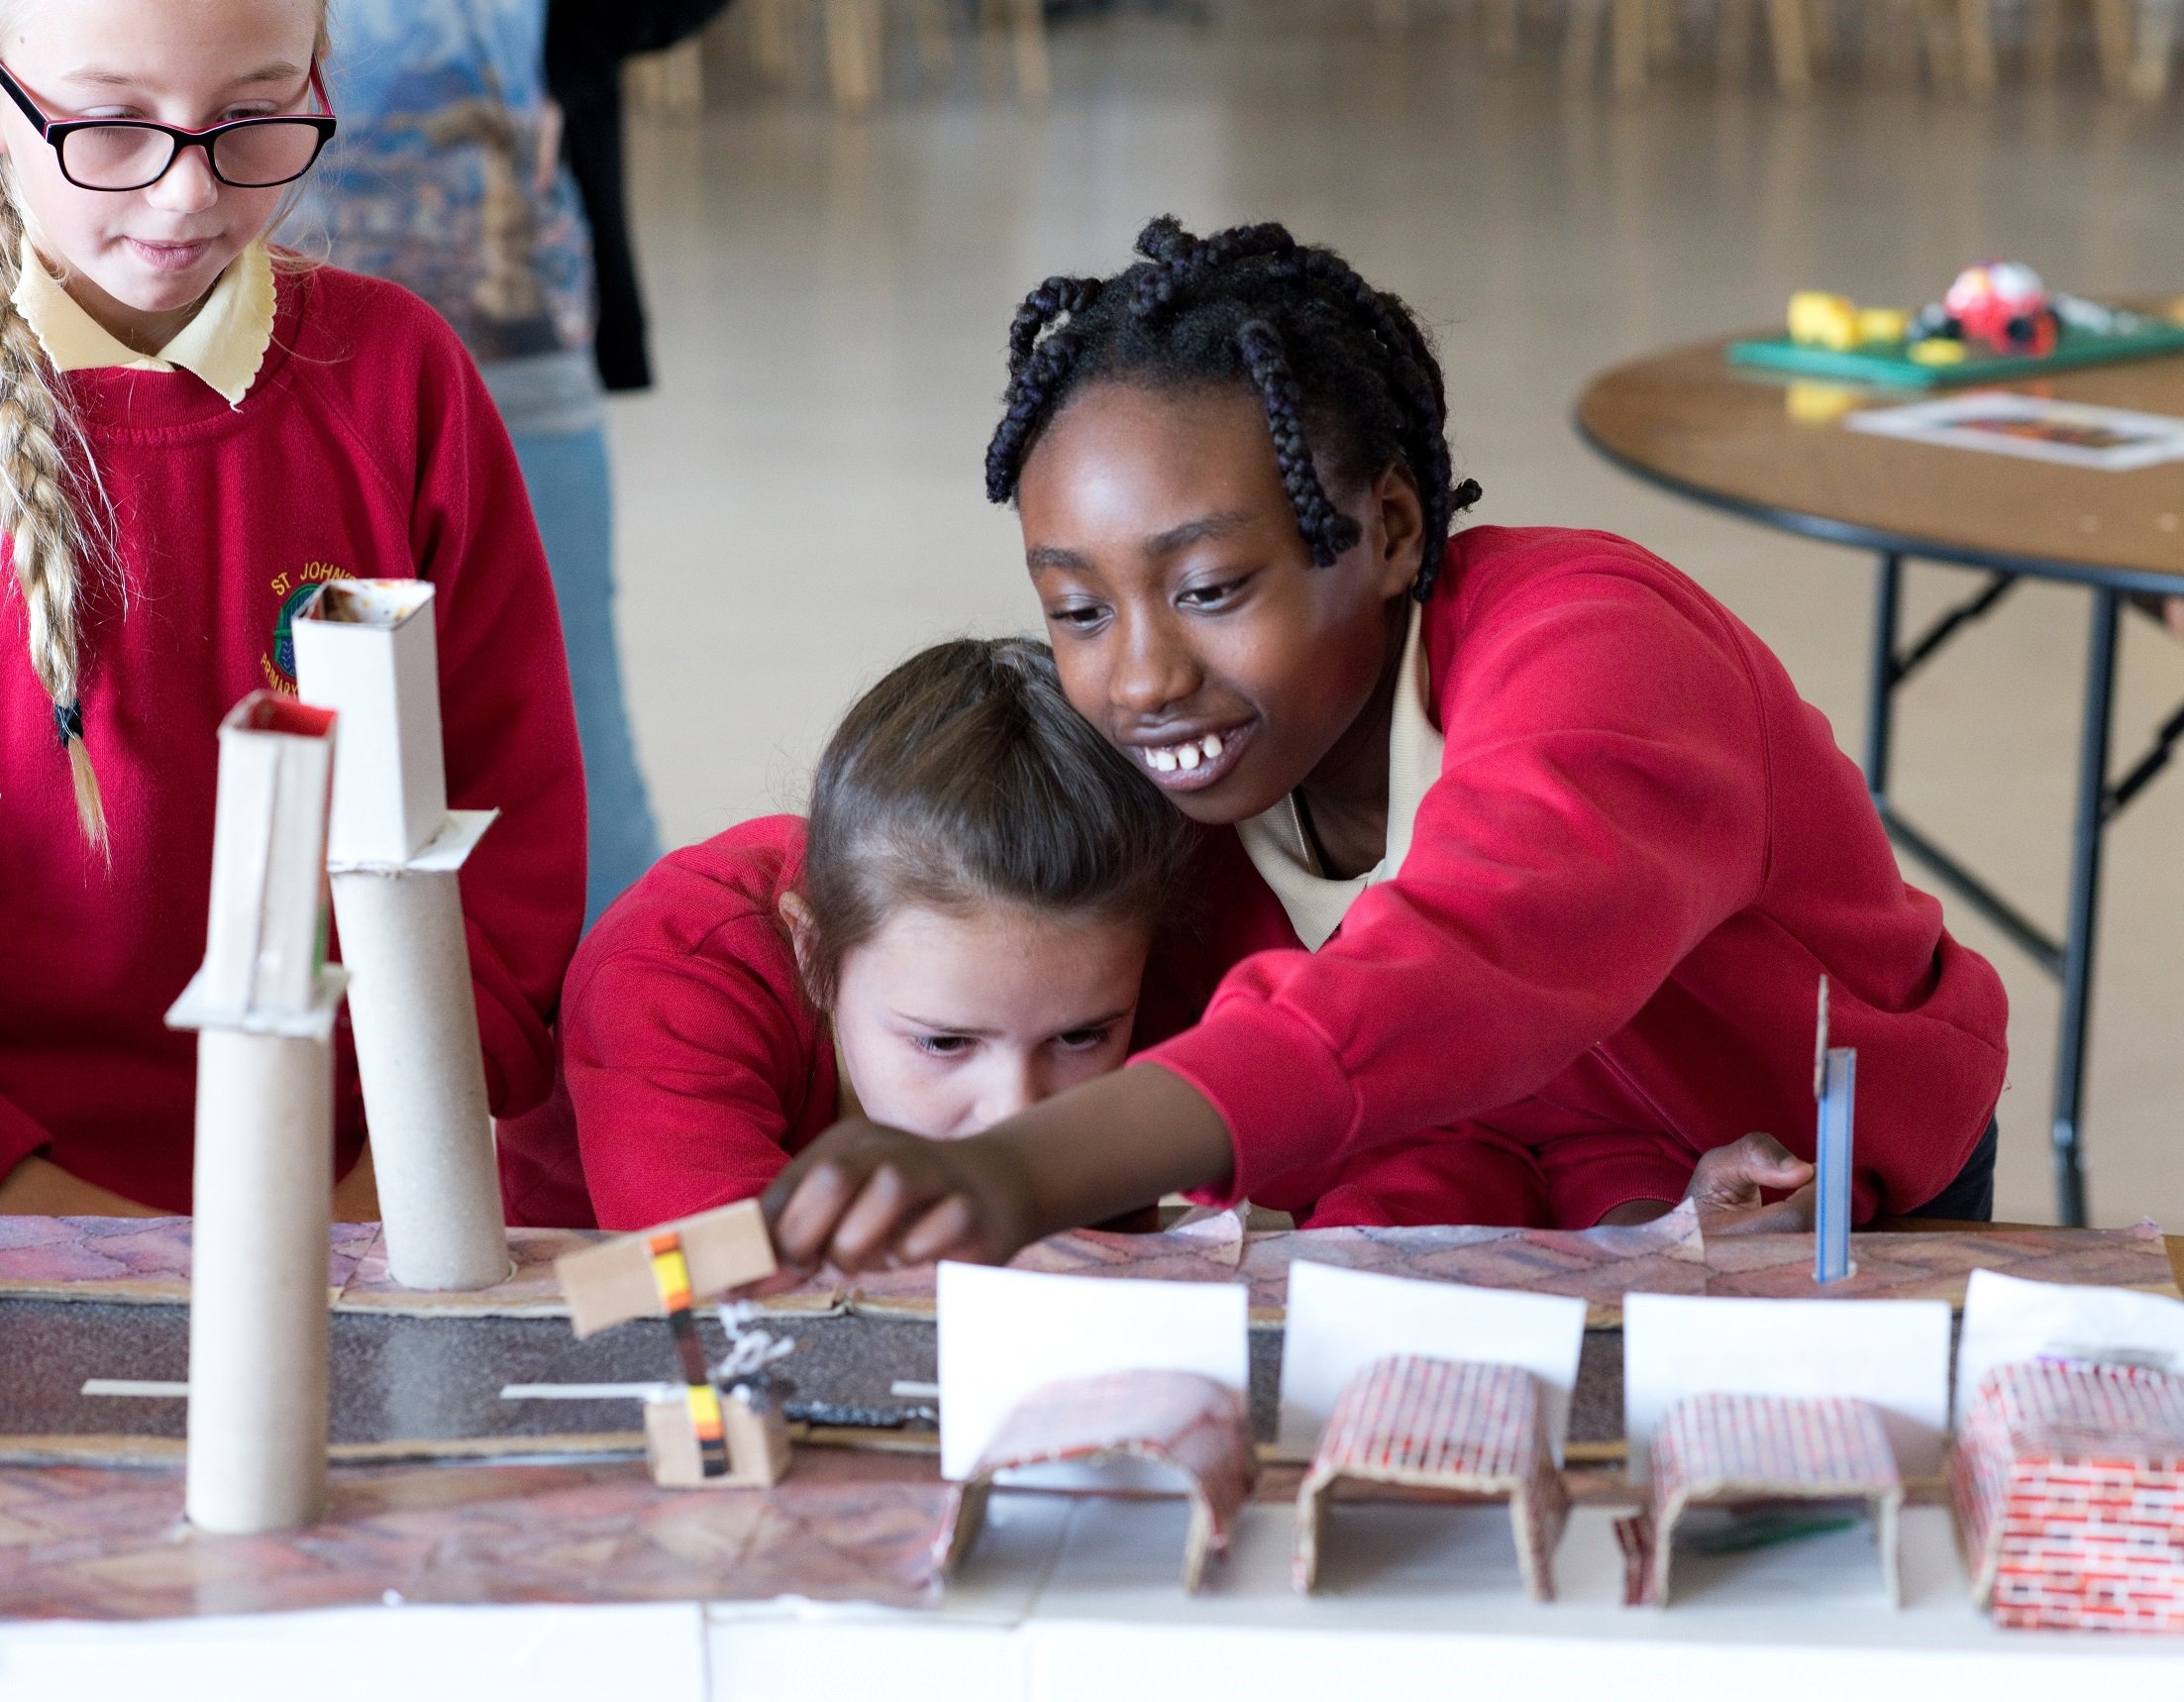 School children building a model